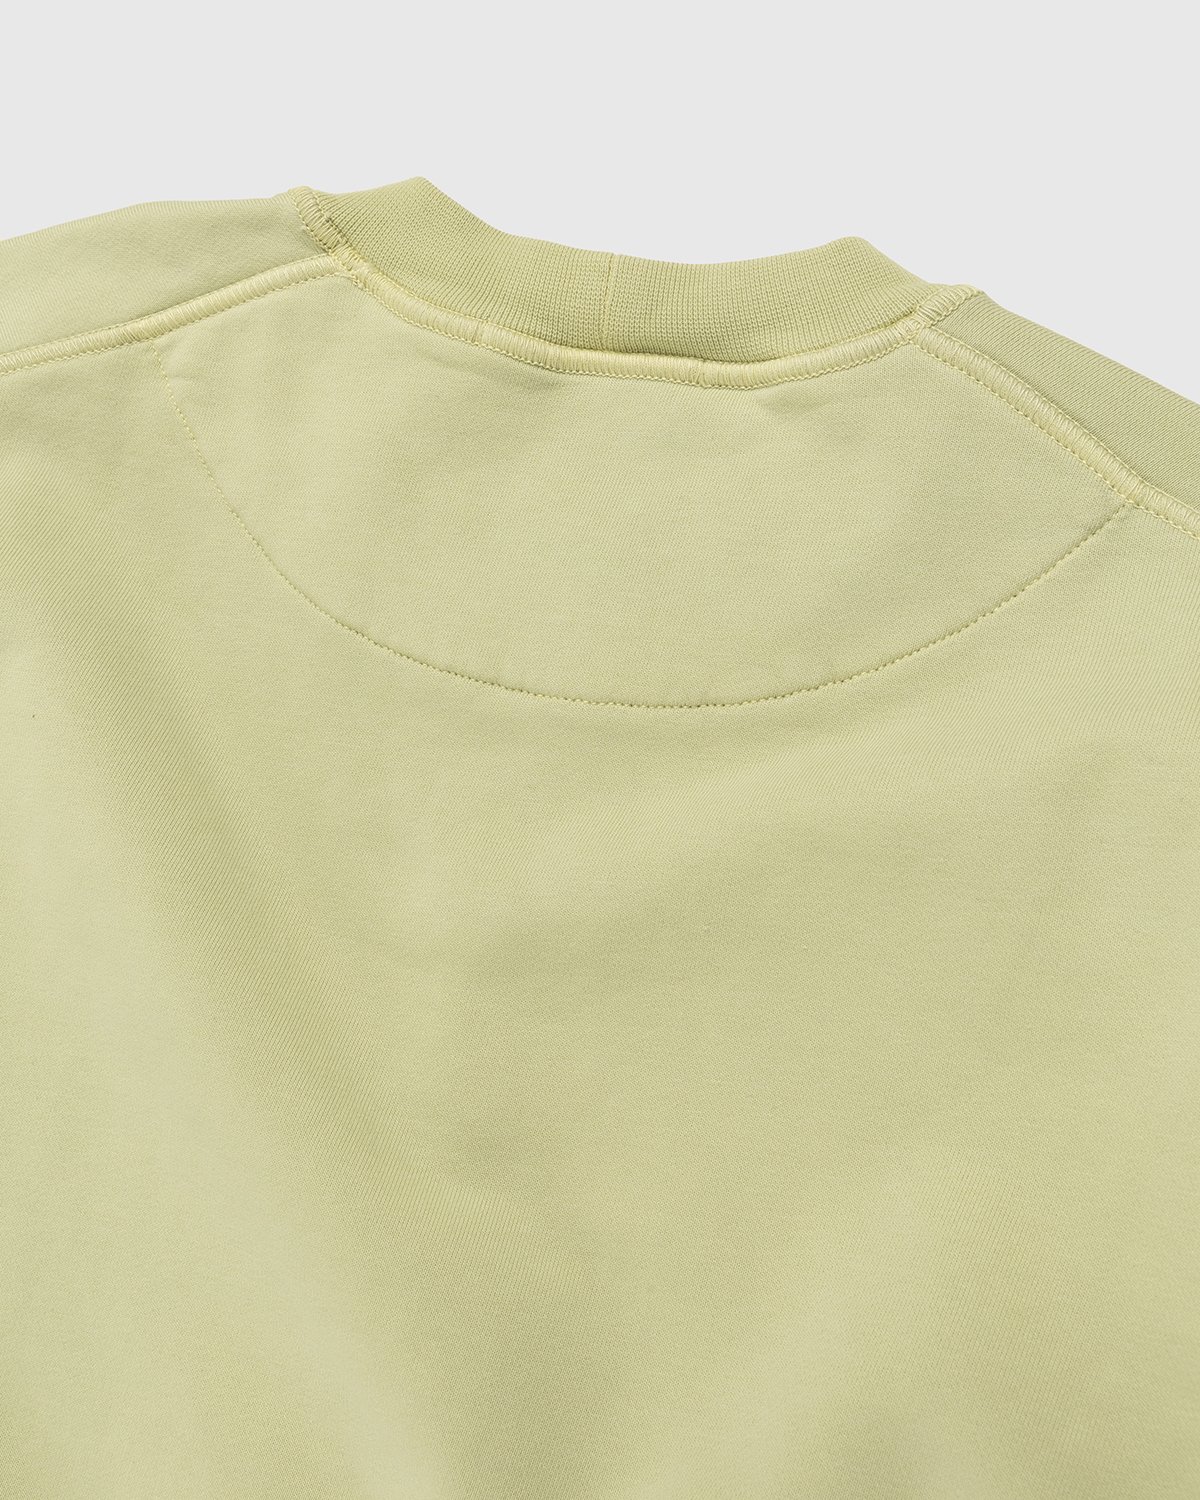 Stone Island - 63051 Garment-Dyed Cotton Fleece Crewneck Light Green - Clothing - Green - Image 3